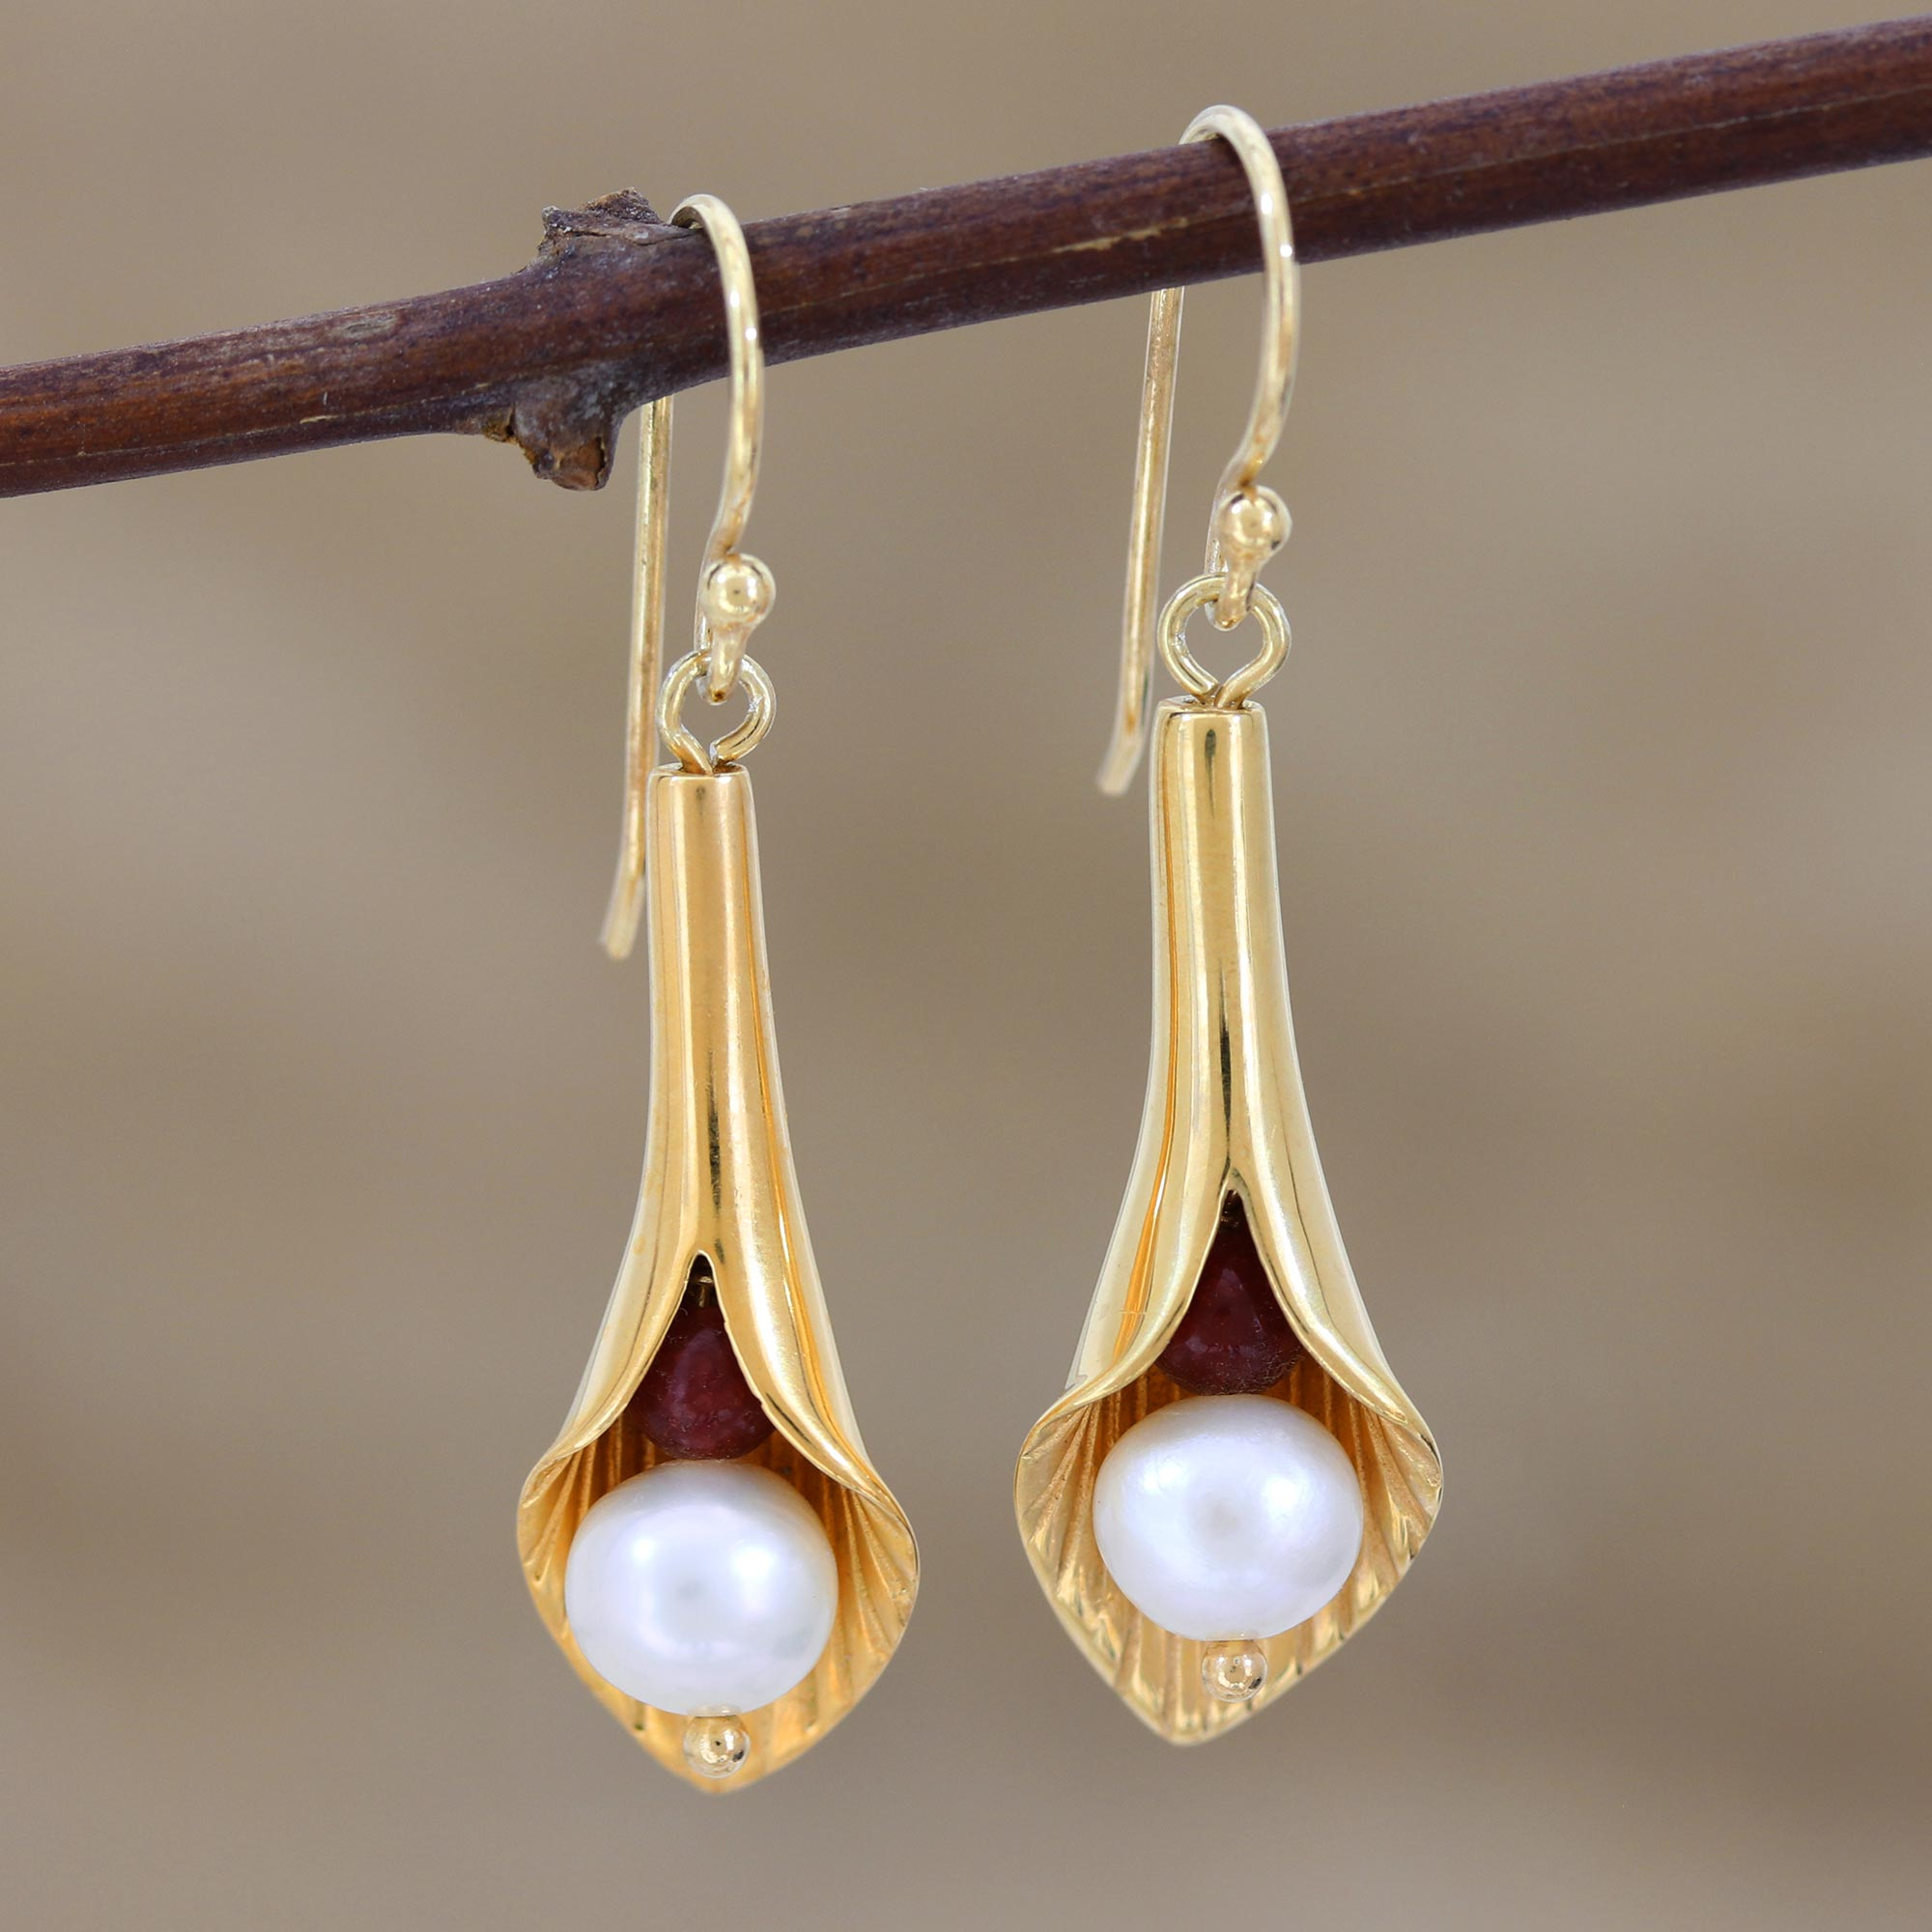 Bridal Jewelry Earrings in Vermeil and Pearls - Secret Lilies | NOVICA